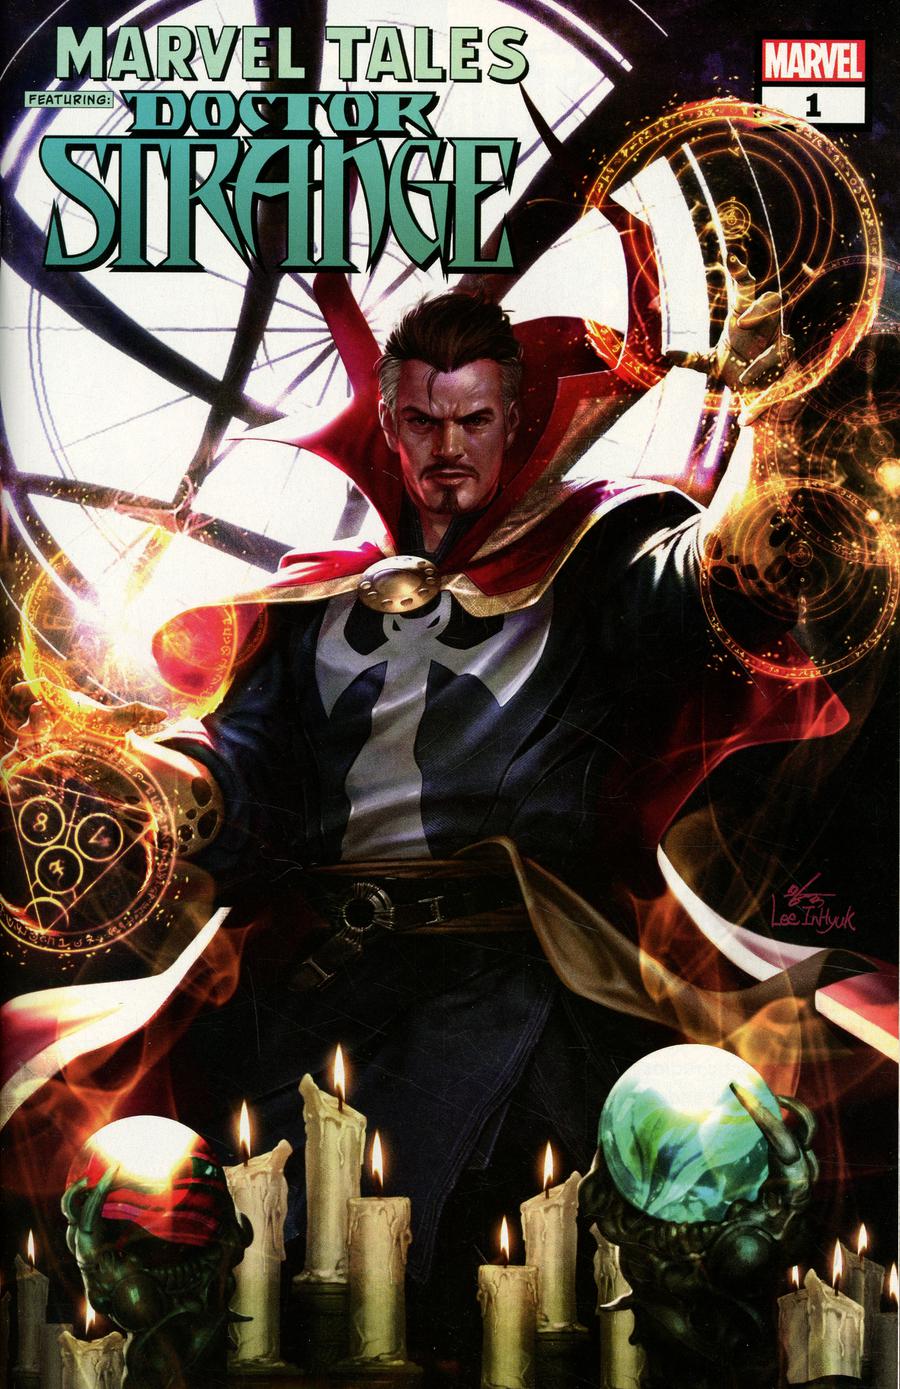 Marvel Tales Doctor Strange #1 Cover A Regular Inhyuk Lee Cover